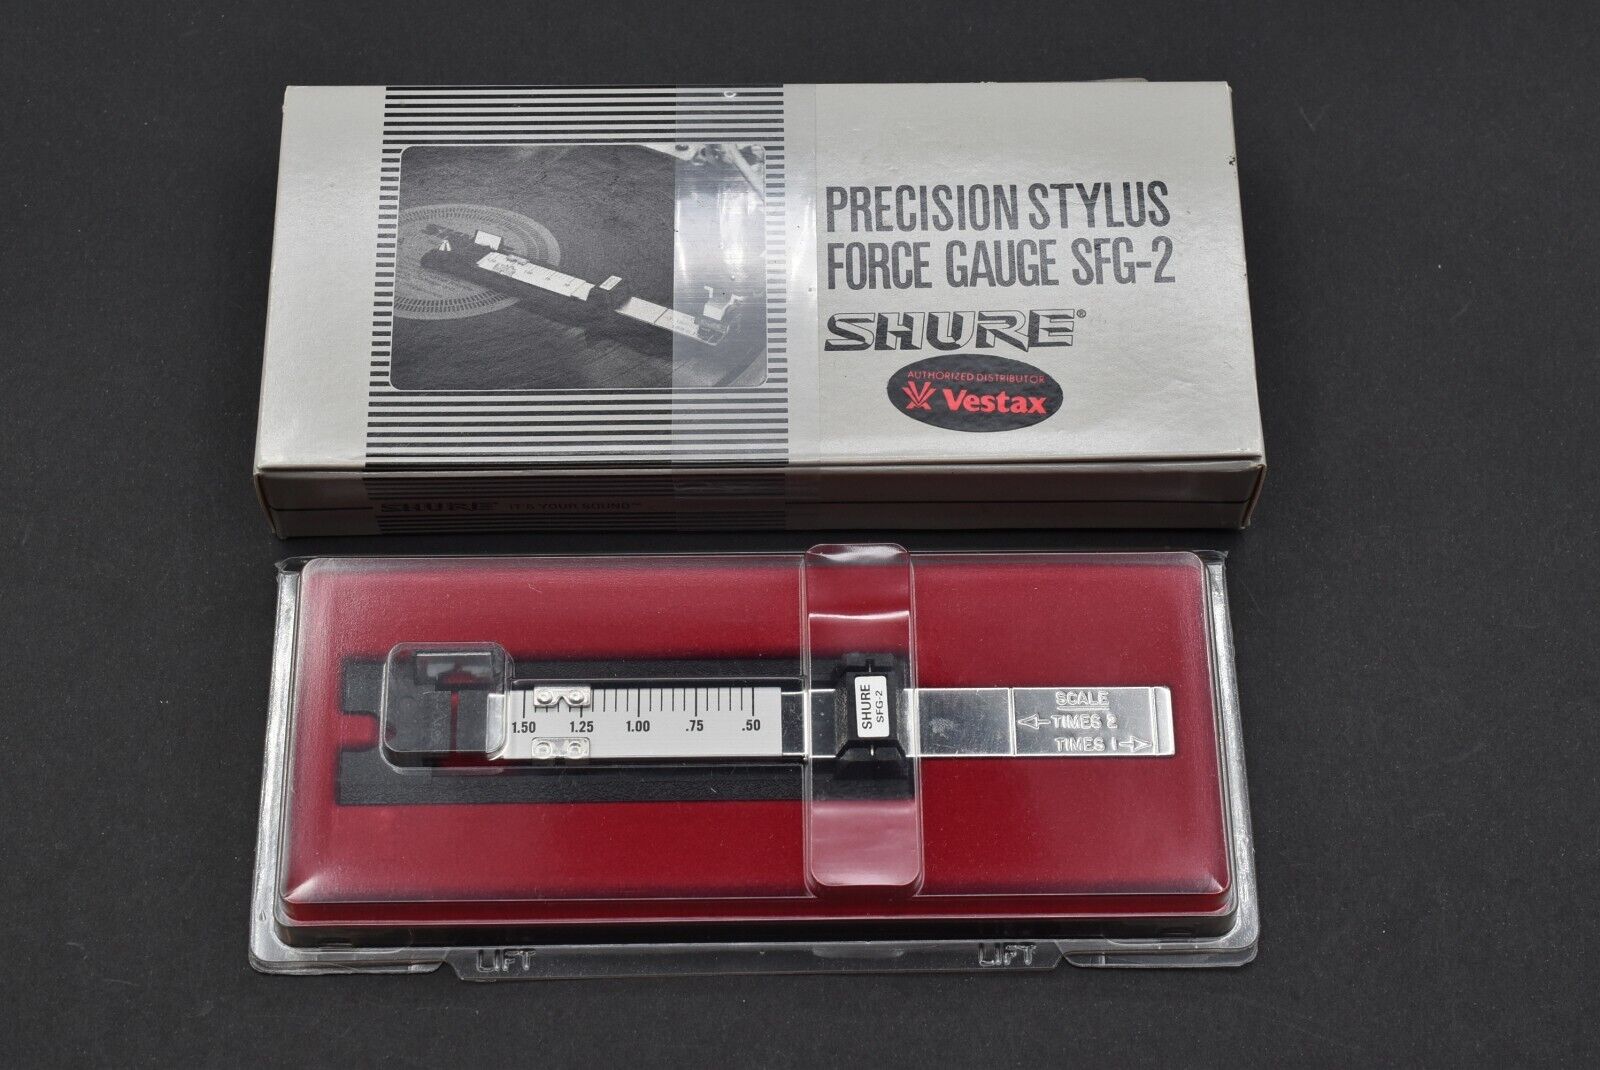 SHURE Precision Stylus Force Gauge SFG-2